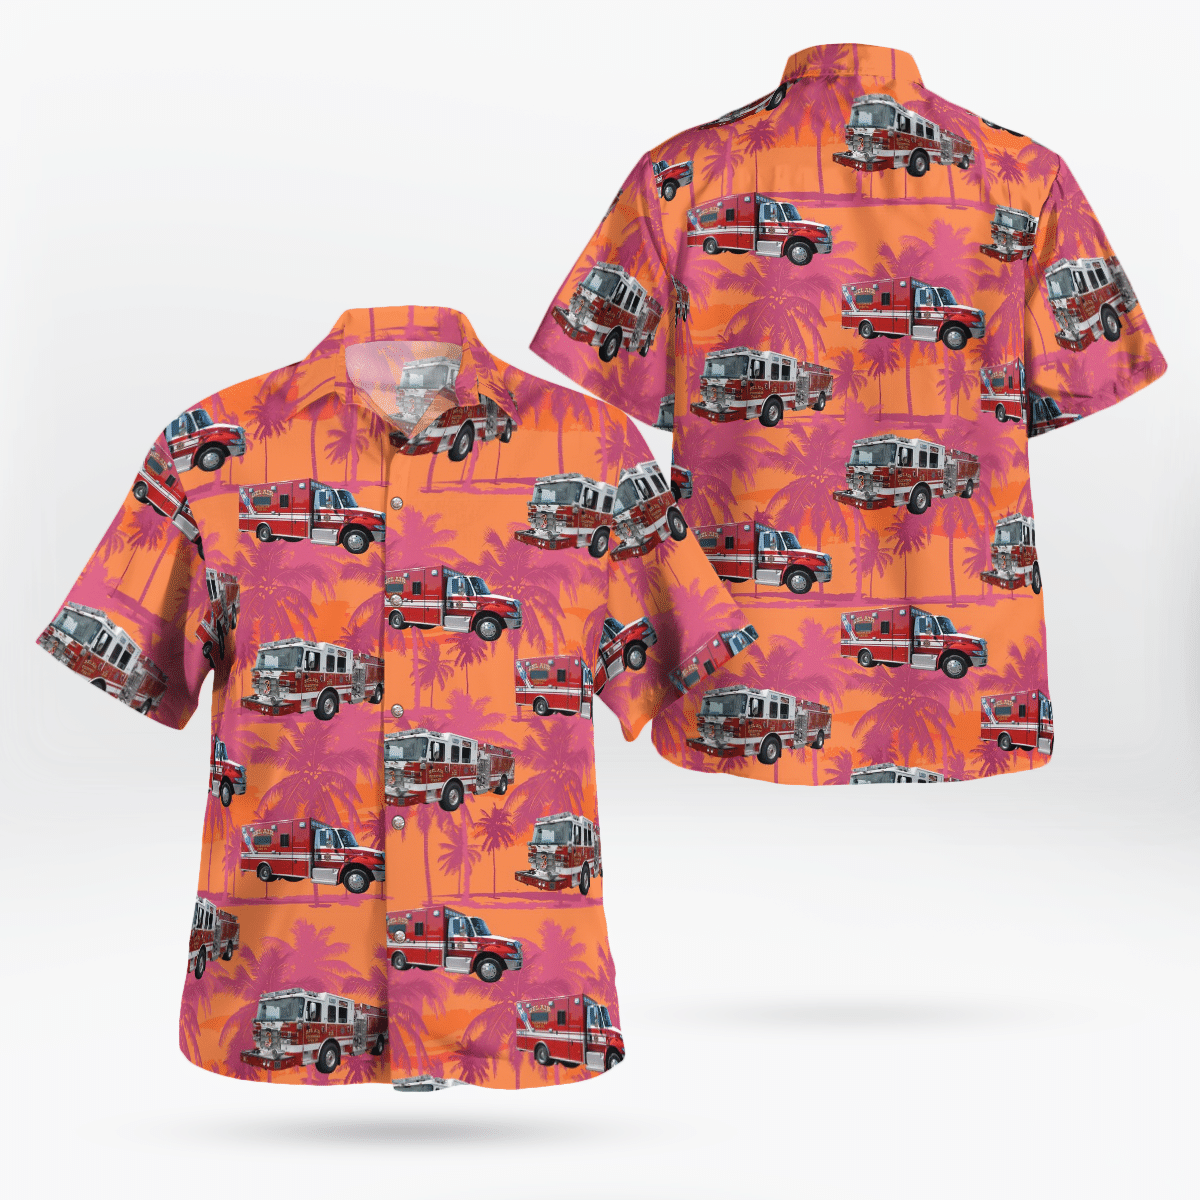 Listed below are some High-quality Aloha Shirt 463